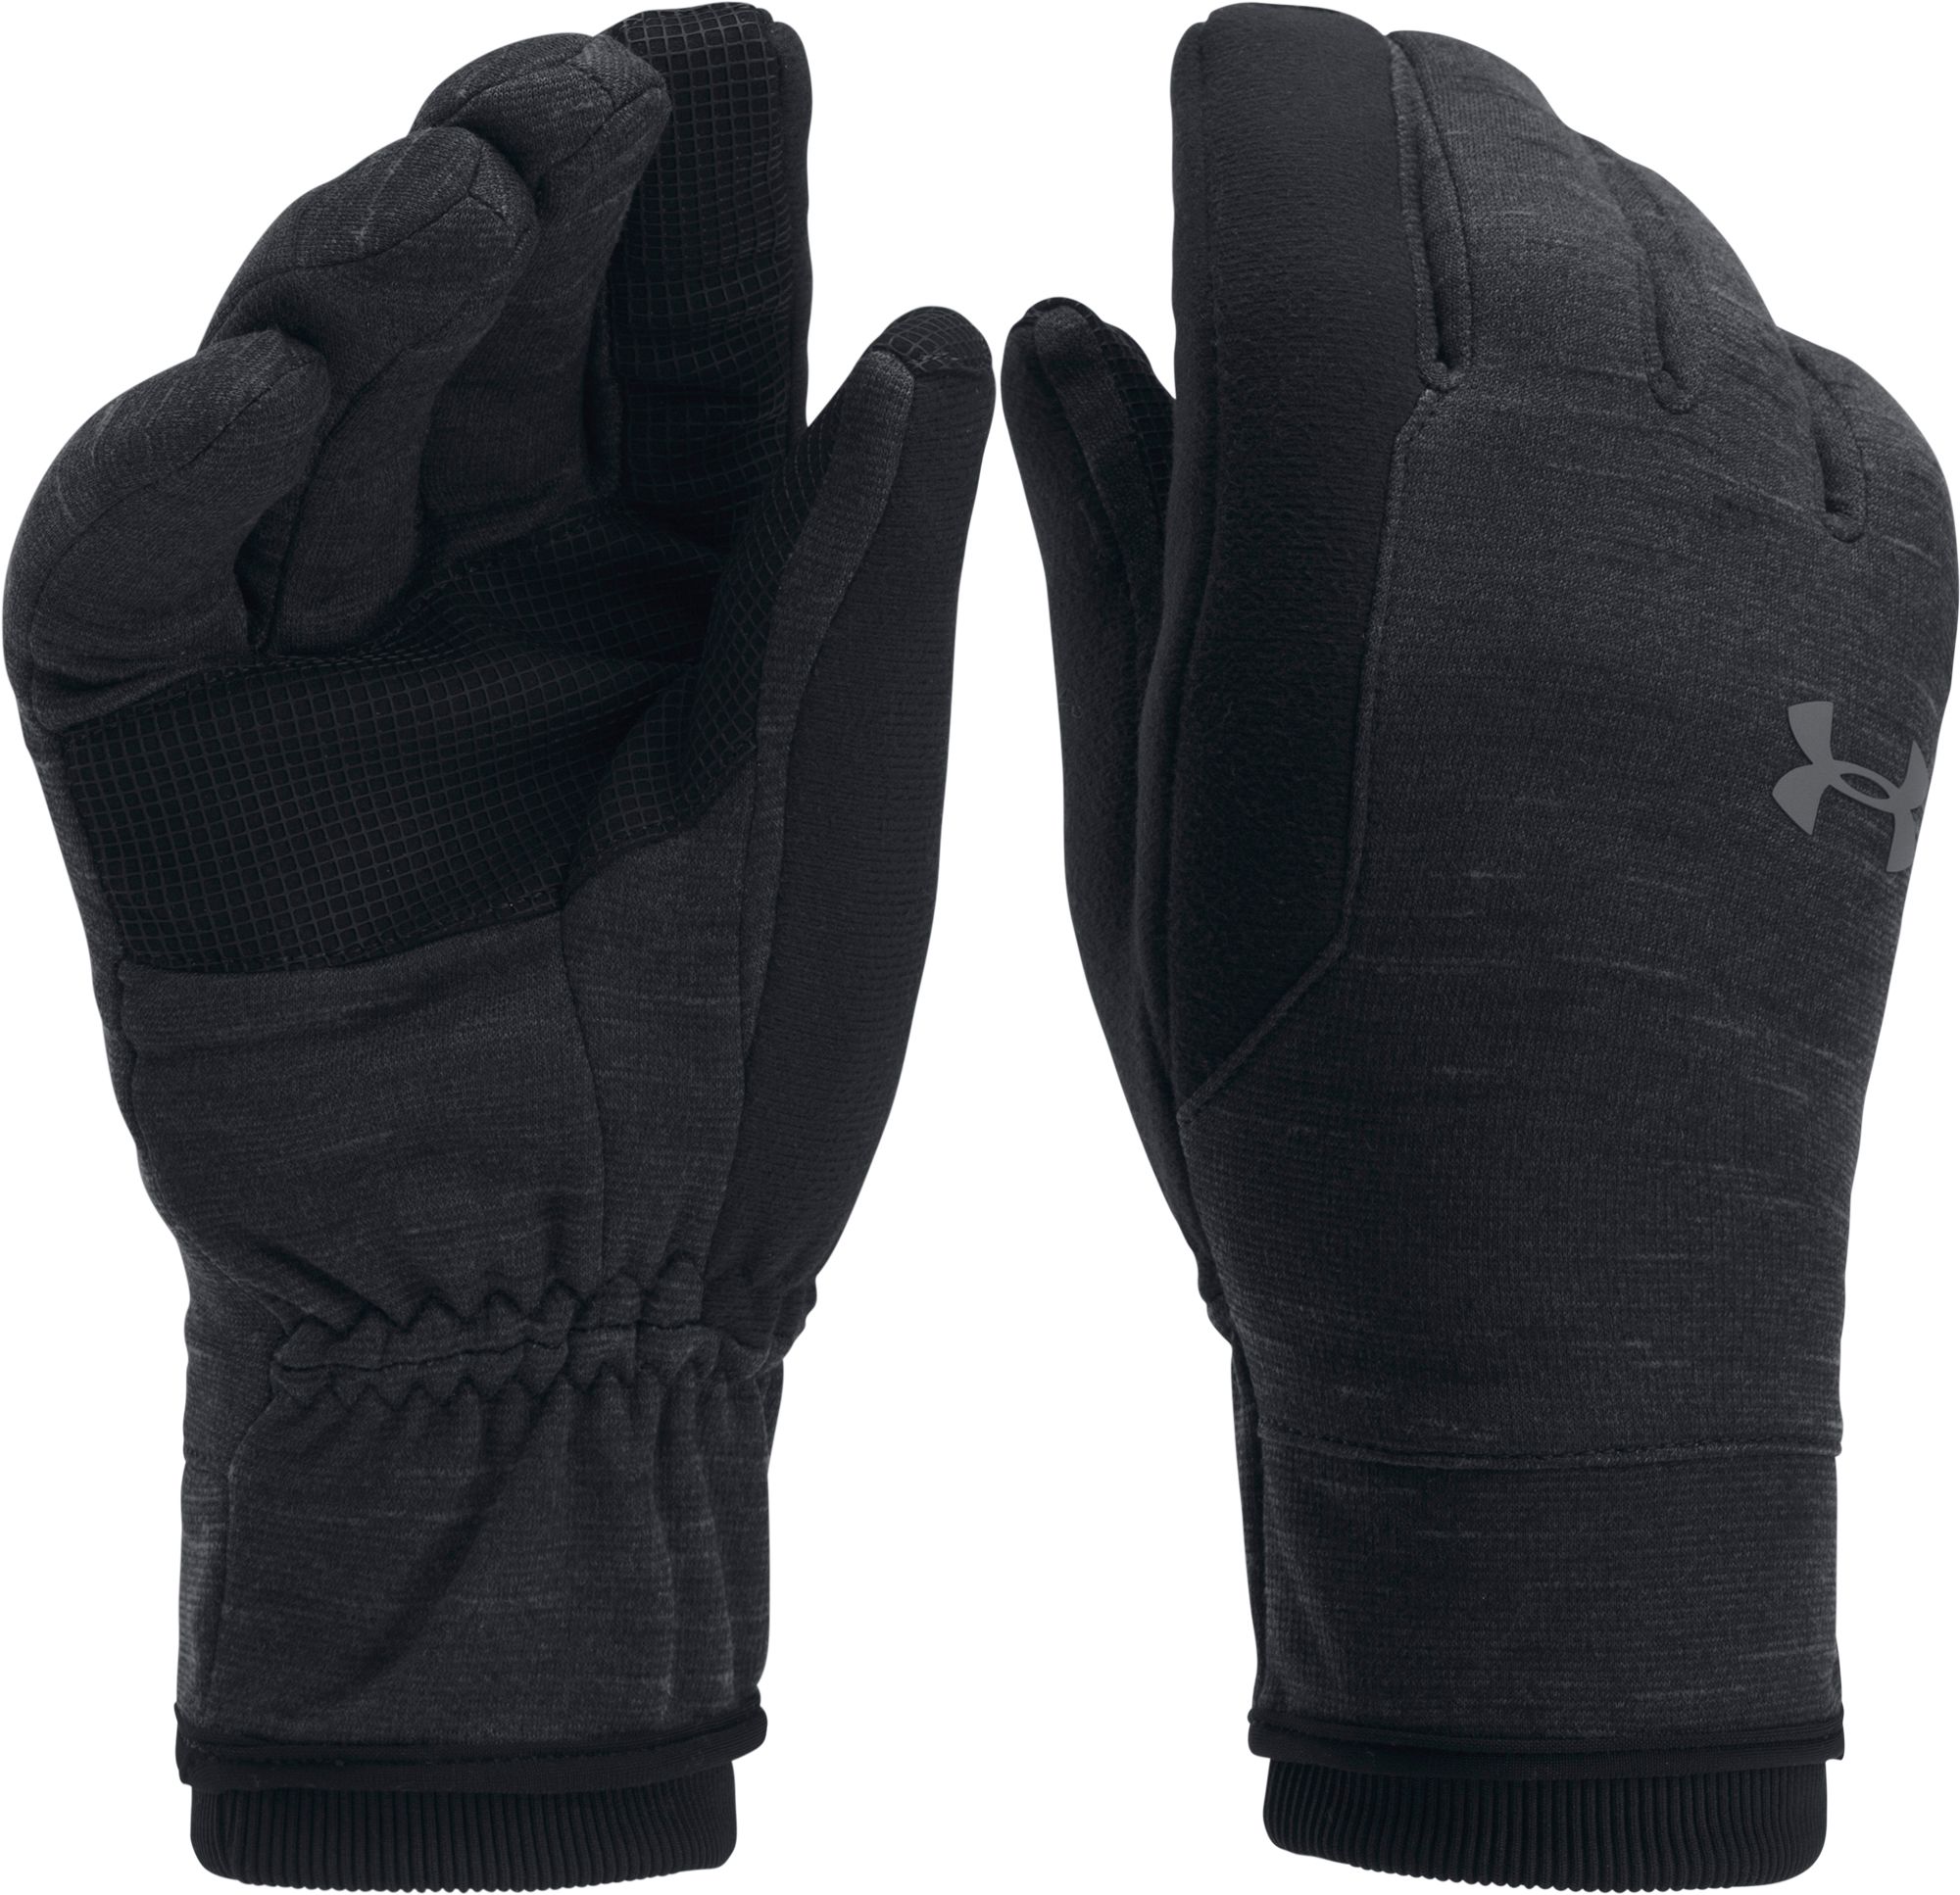 Under Armour Men's Elements Gloves 